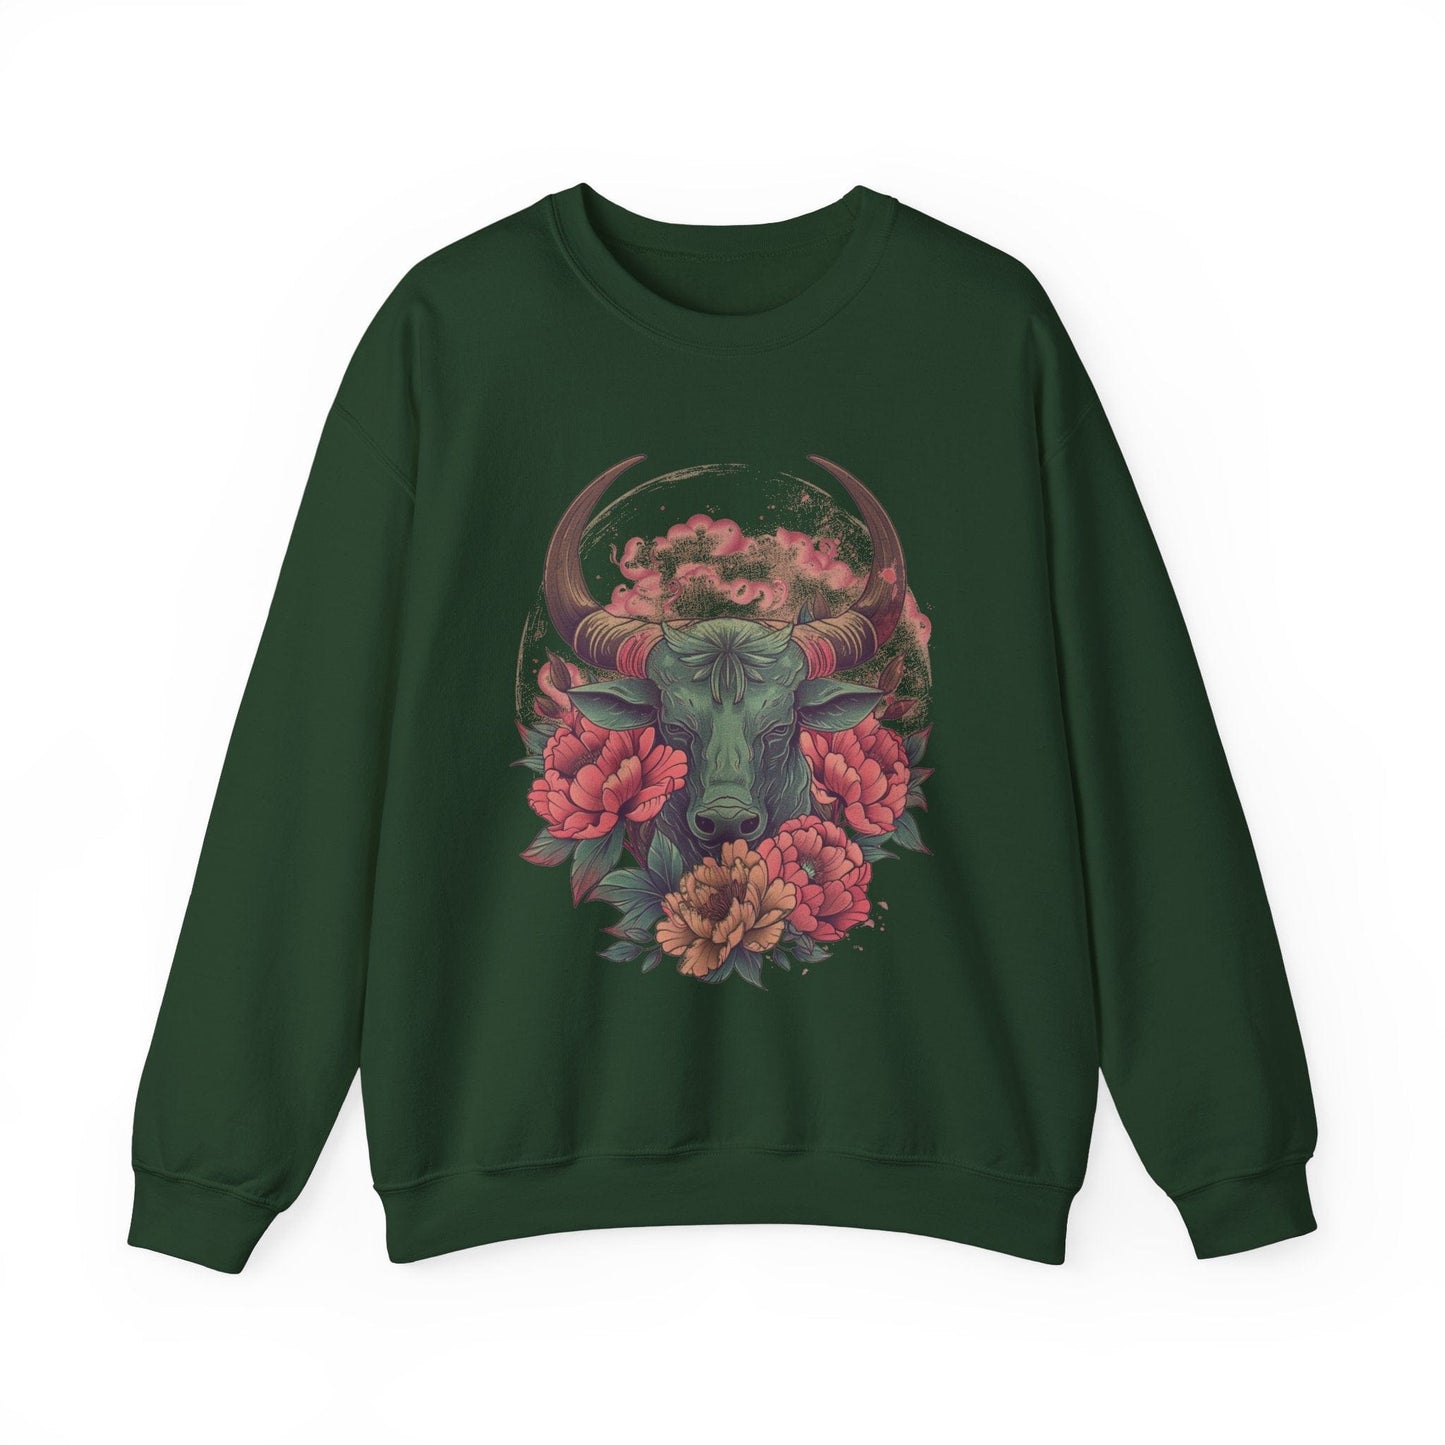 Sweatshirt S / Forest Green Taurus Floral Majesty Sweater